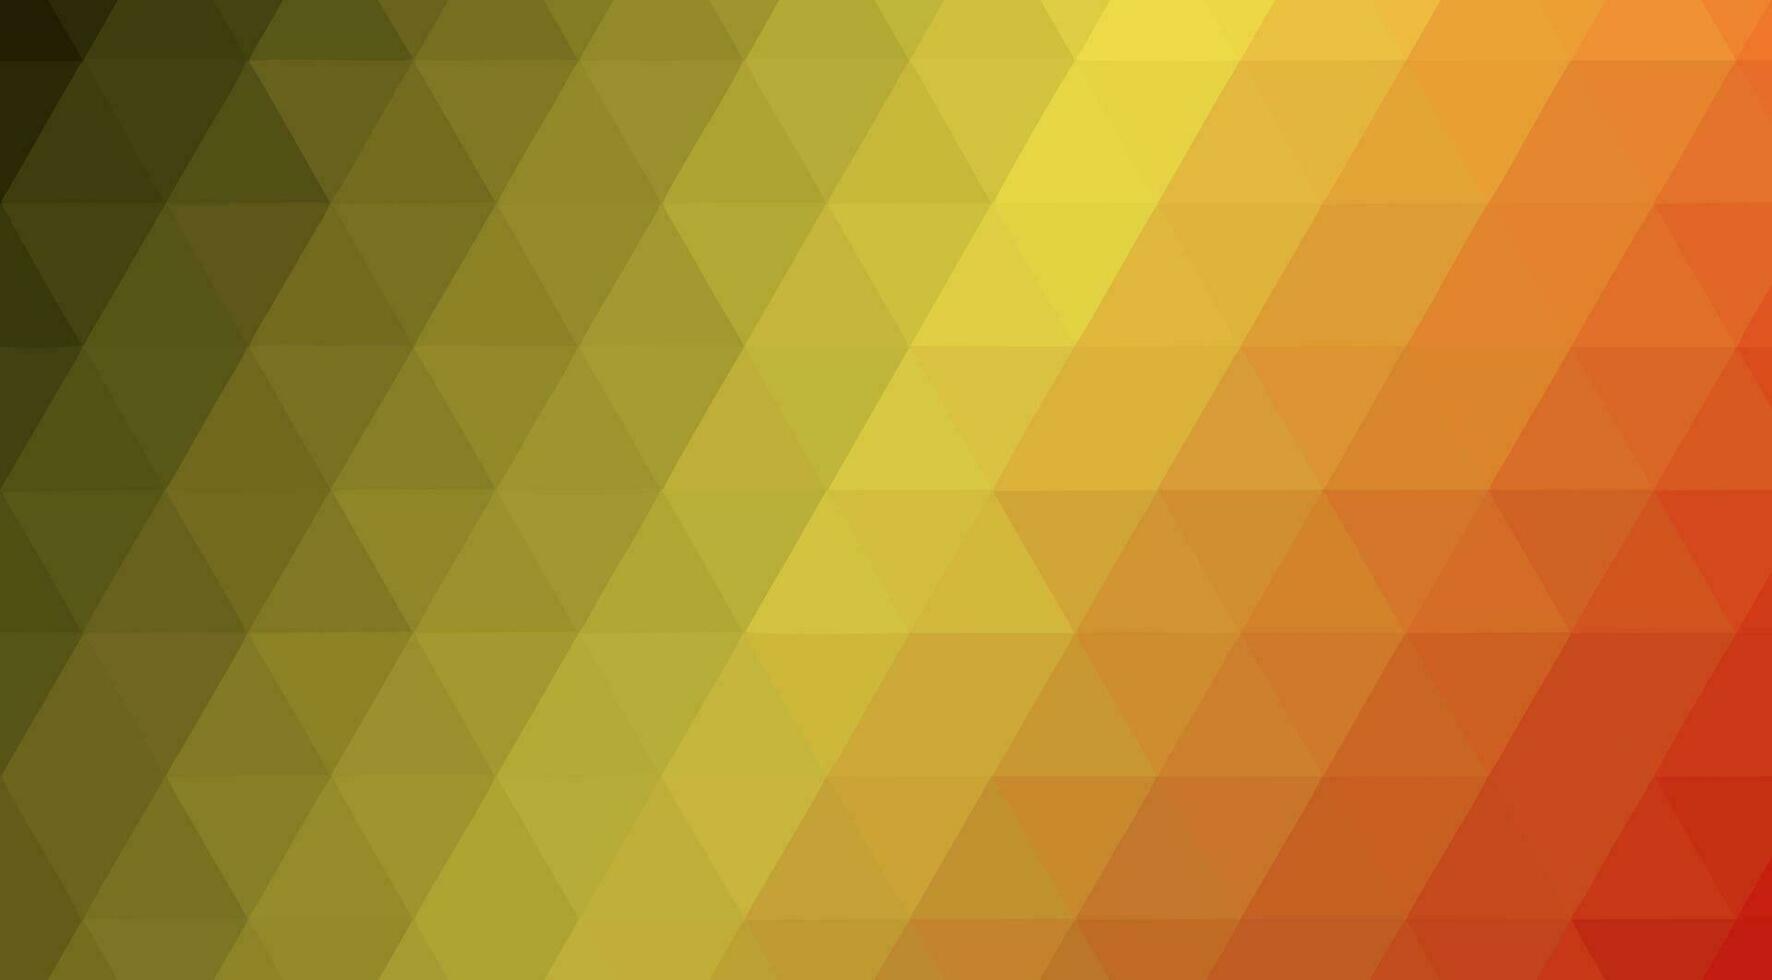 Bélgica poligonal bandera mosaico moderno antecedentes. geométrico diseño vector ilustración